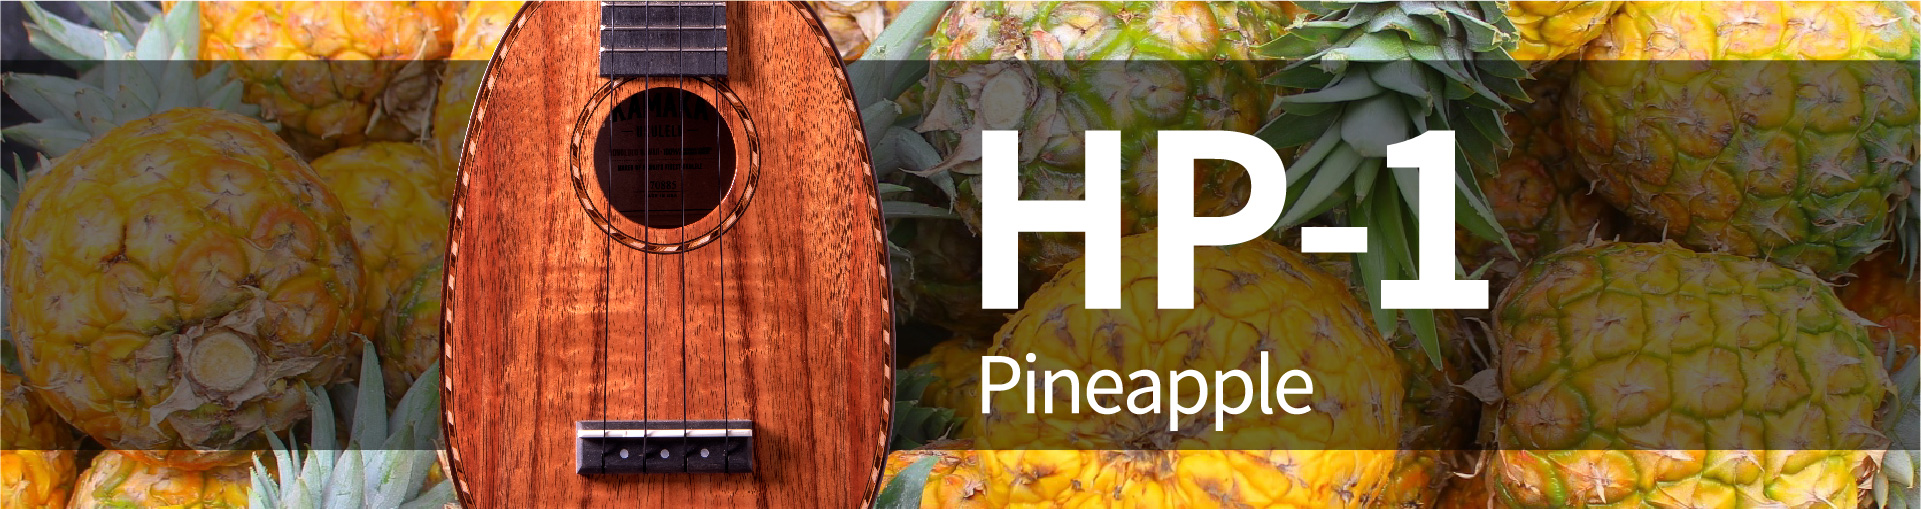 Kamaka Ukulele HP-1 Pineapple